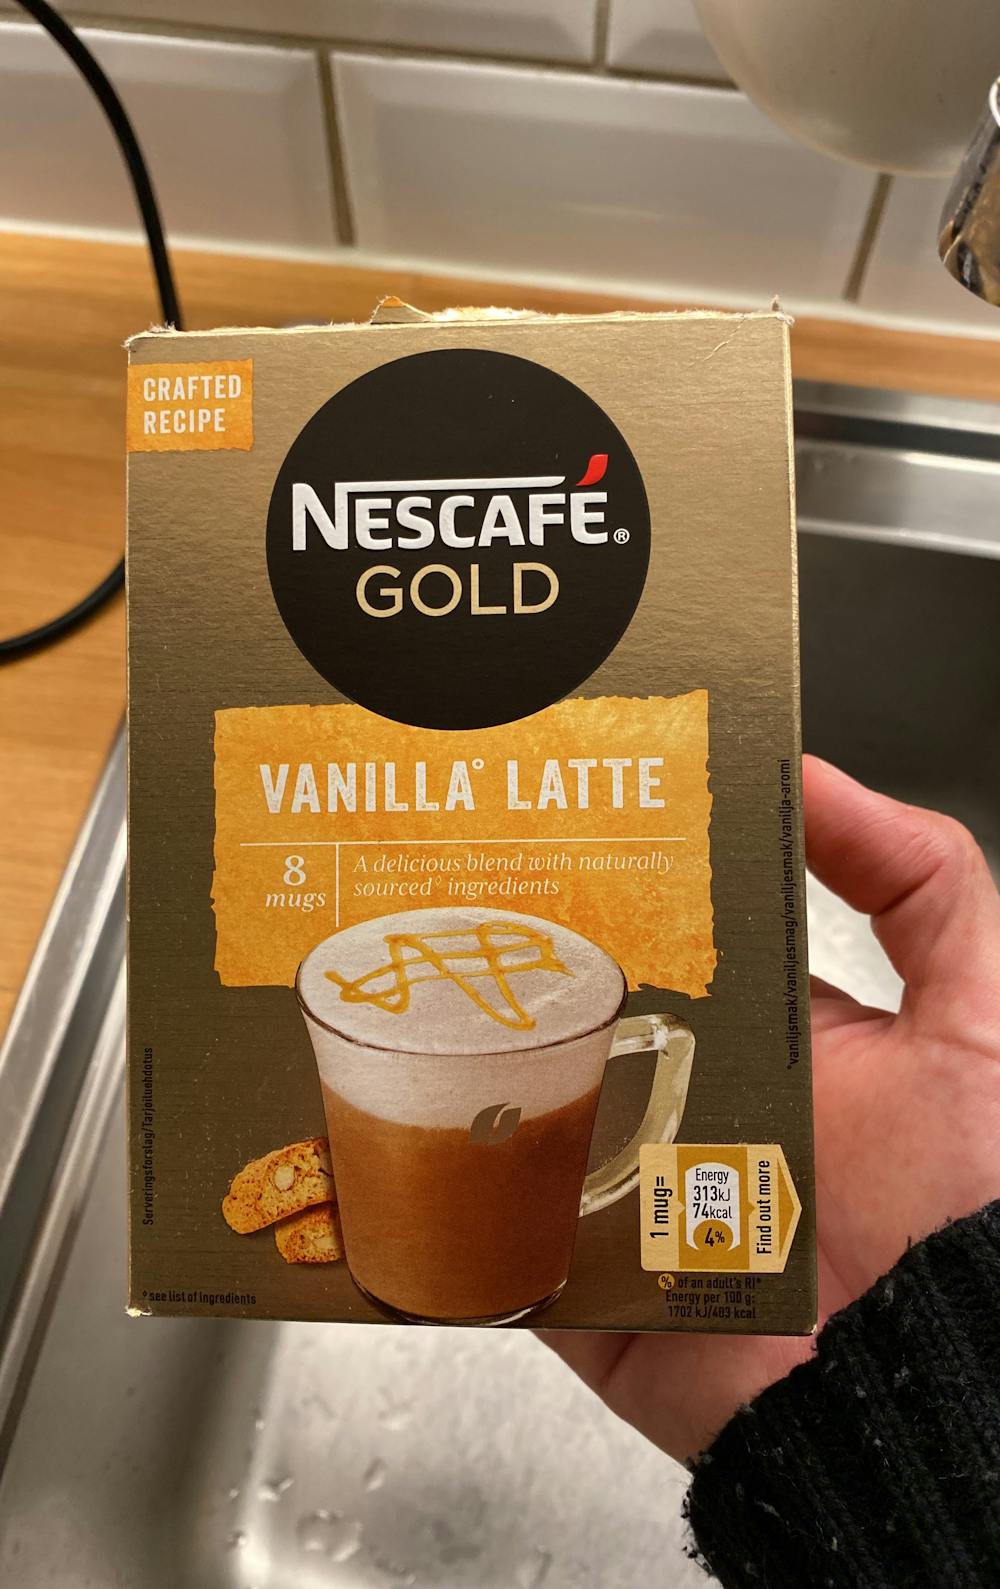 Vanilla latte, Nescafe gold